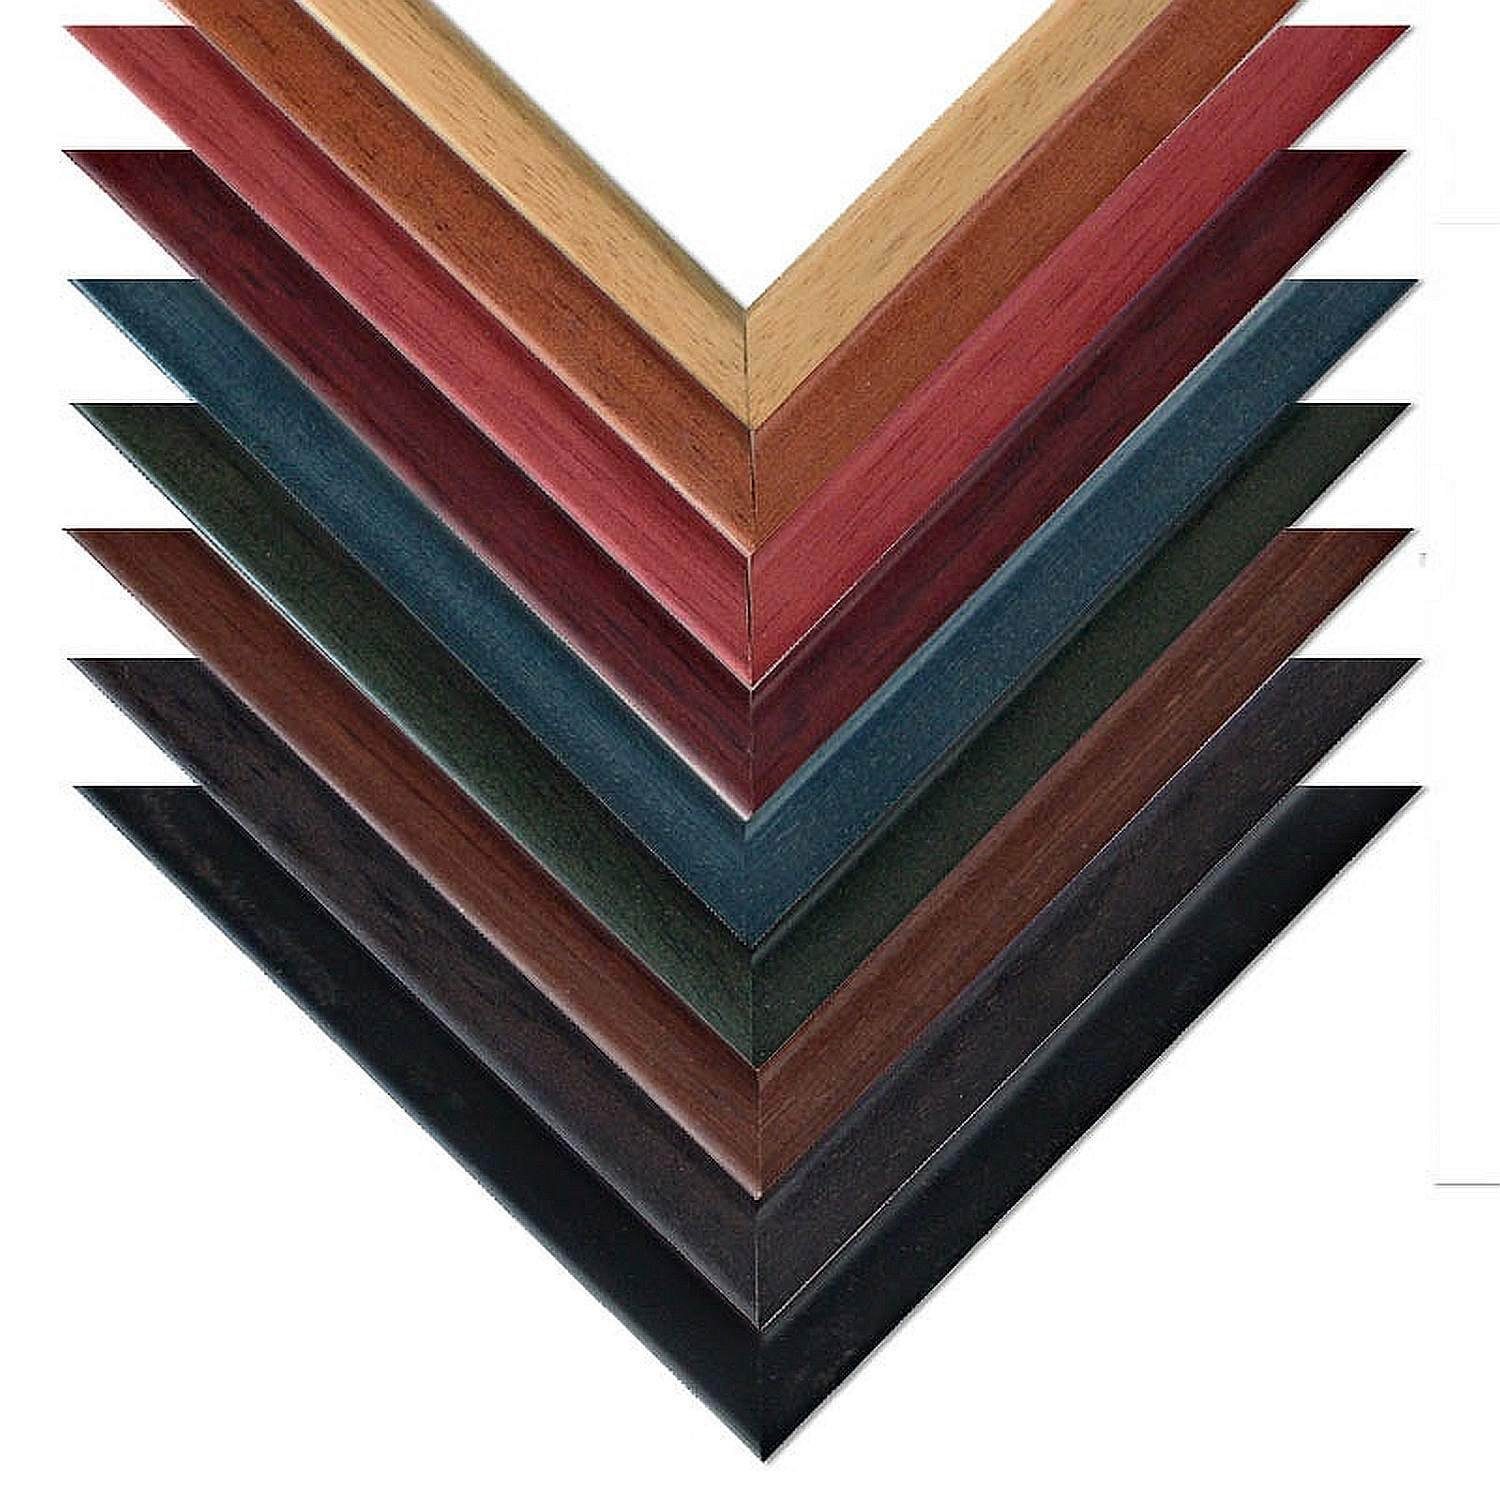 9 DALLAS, rot Neumann matten Bilderrahmen Einzelrahmen in Farben Holzrahmen